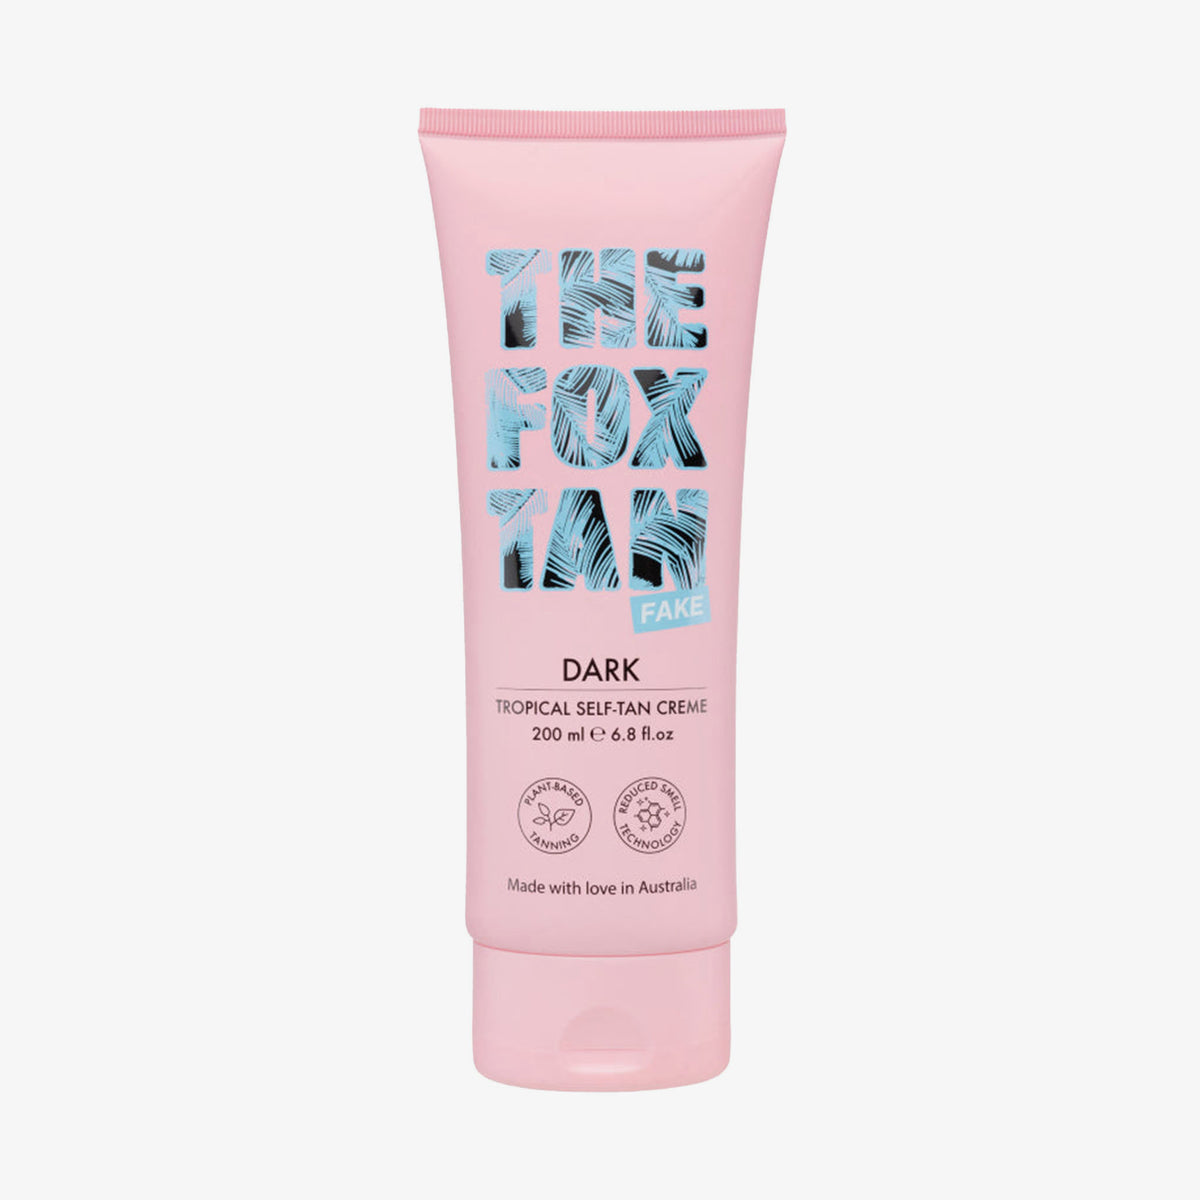 The Fox Tan | Dark Tropical Self-Tan Creme